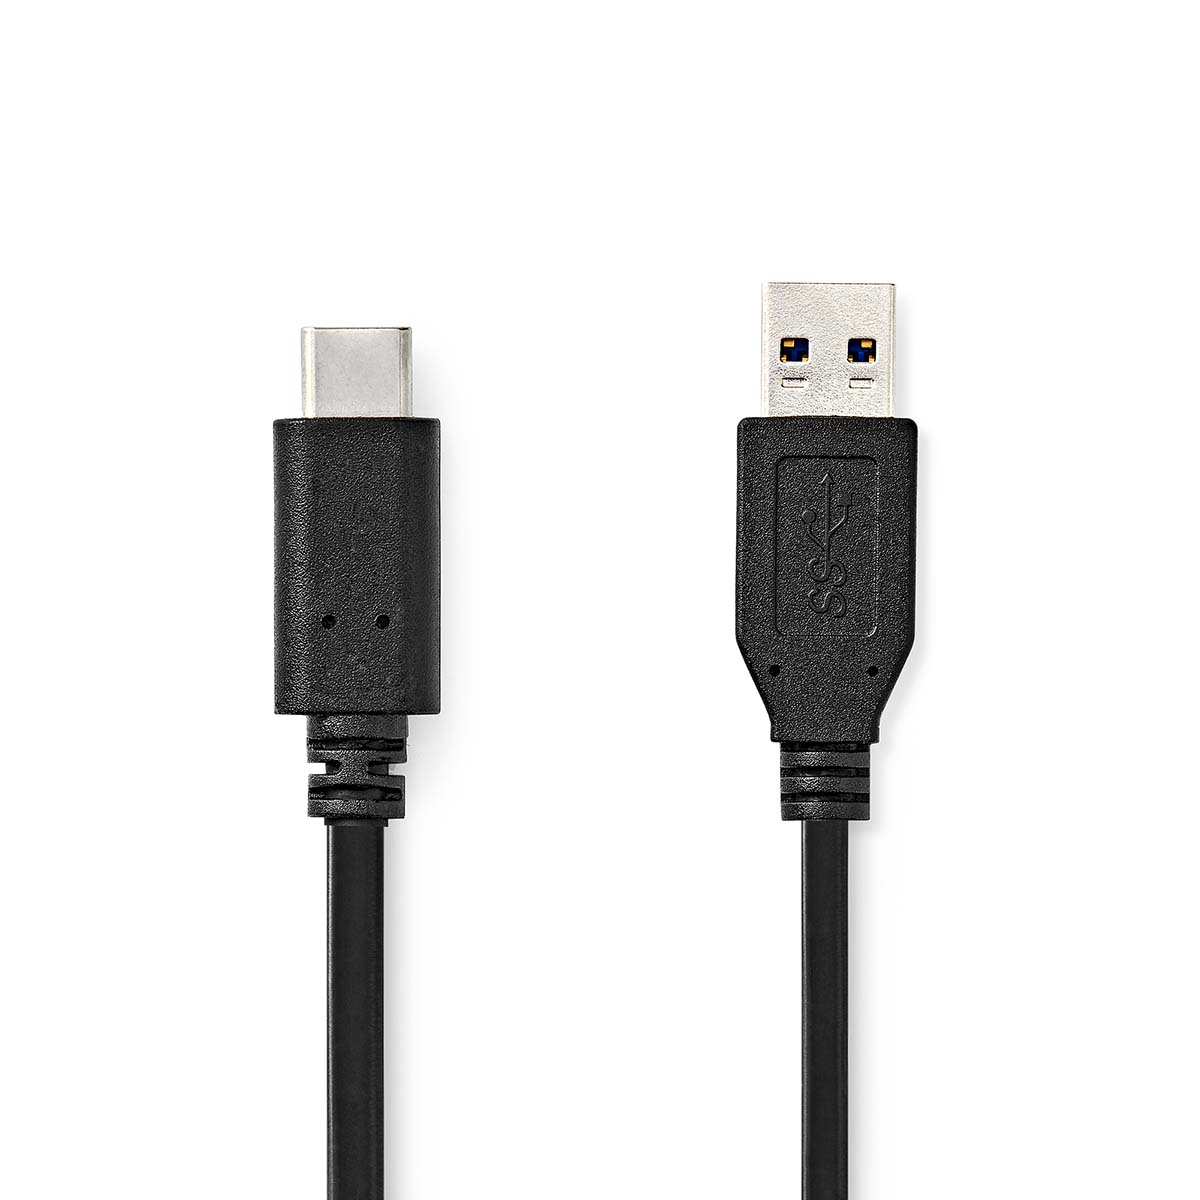 m 1,00 CCGP61650BK10, NEDIS USB-Kabel,